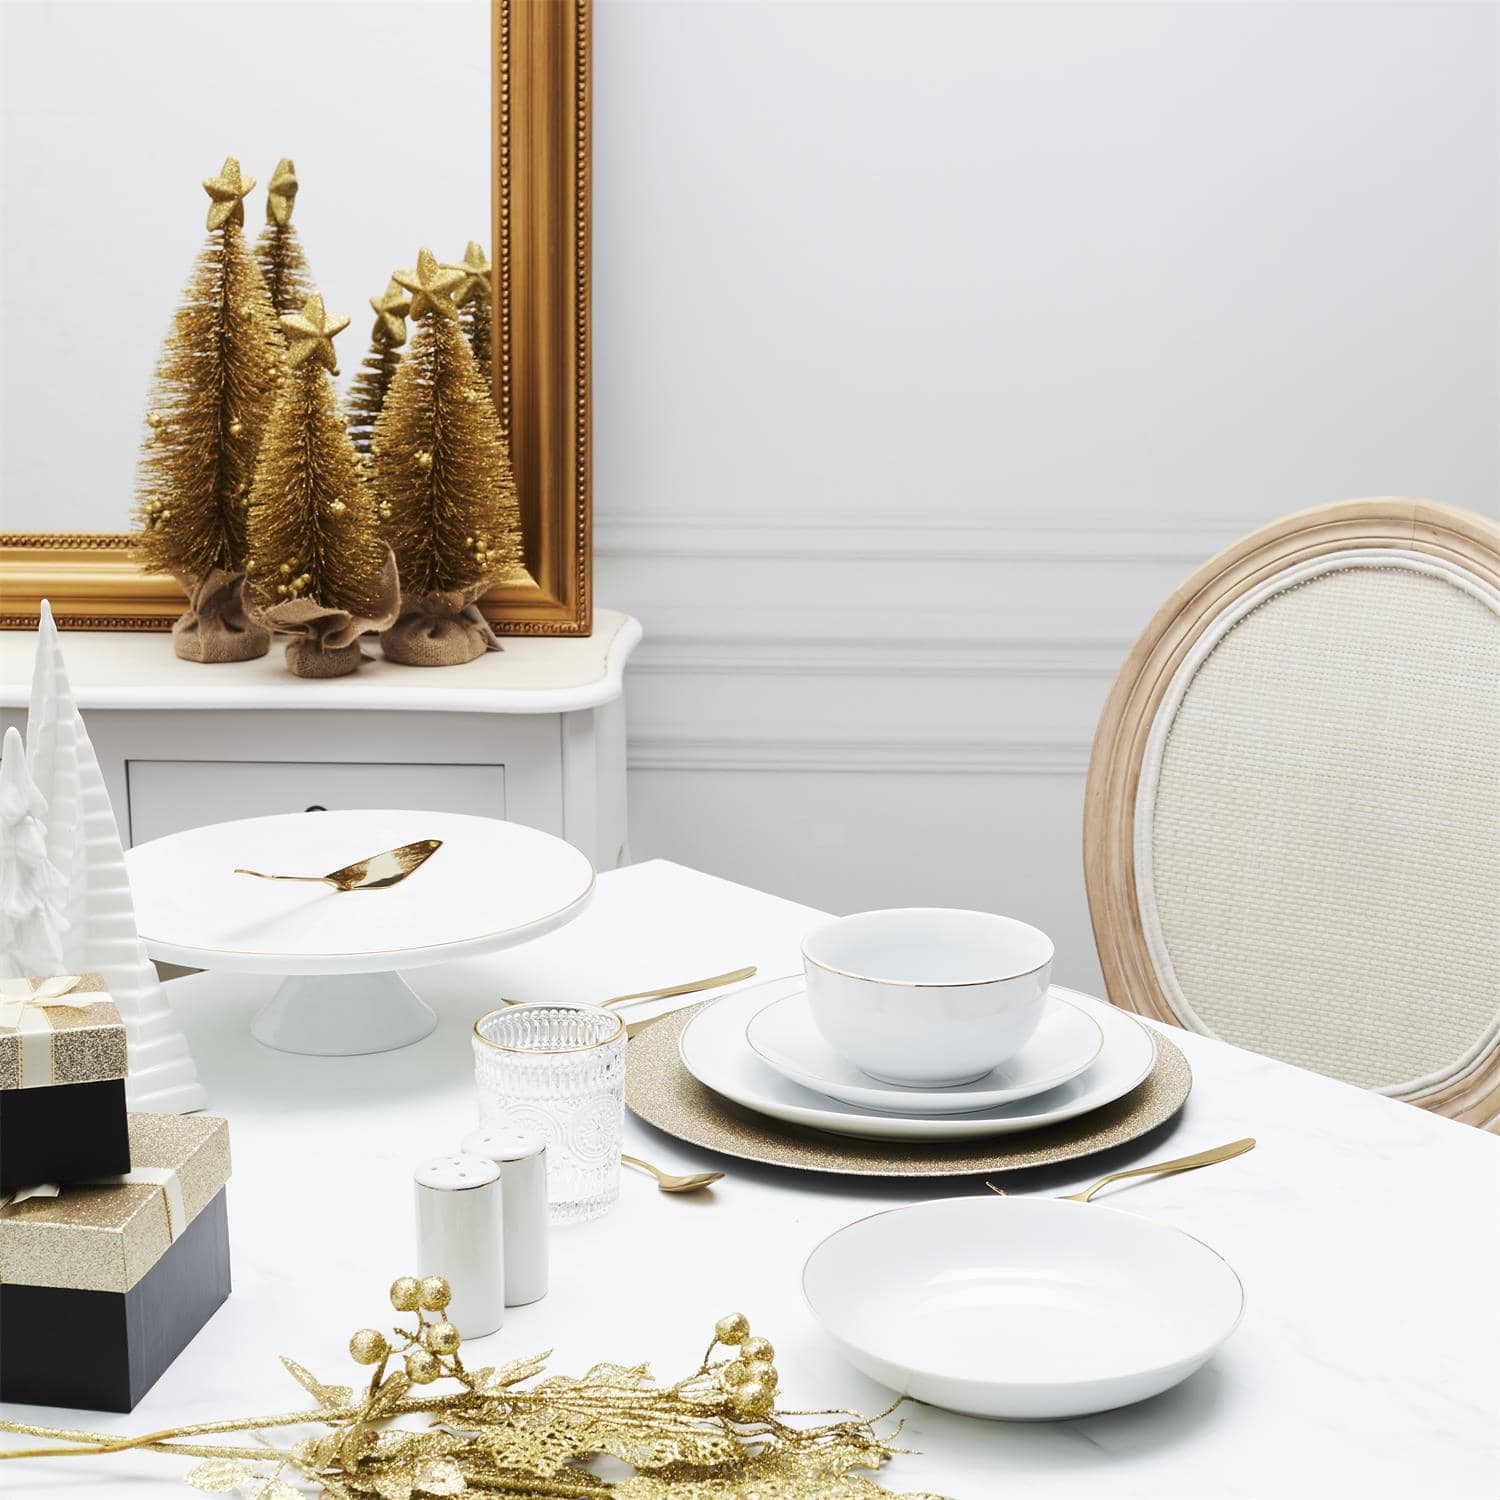 4goodz Classic Dinerbord Set van 6 Porselein 27 cm - Wit Goud rand